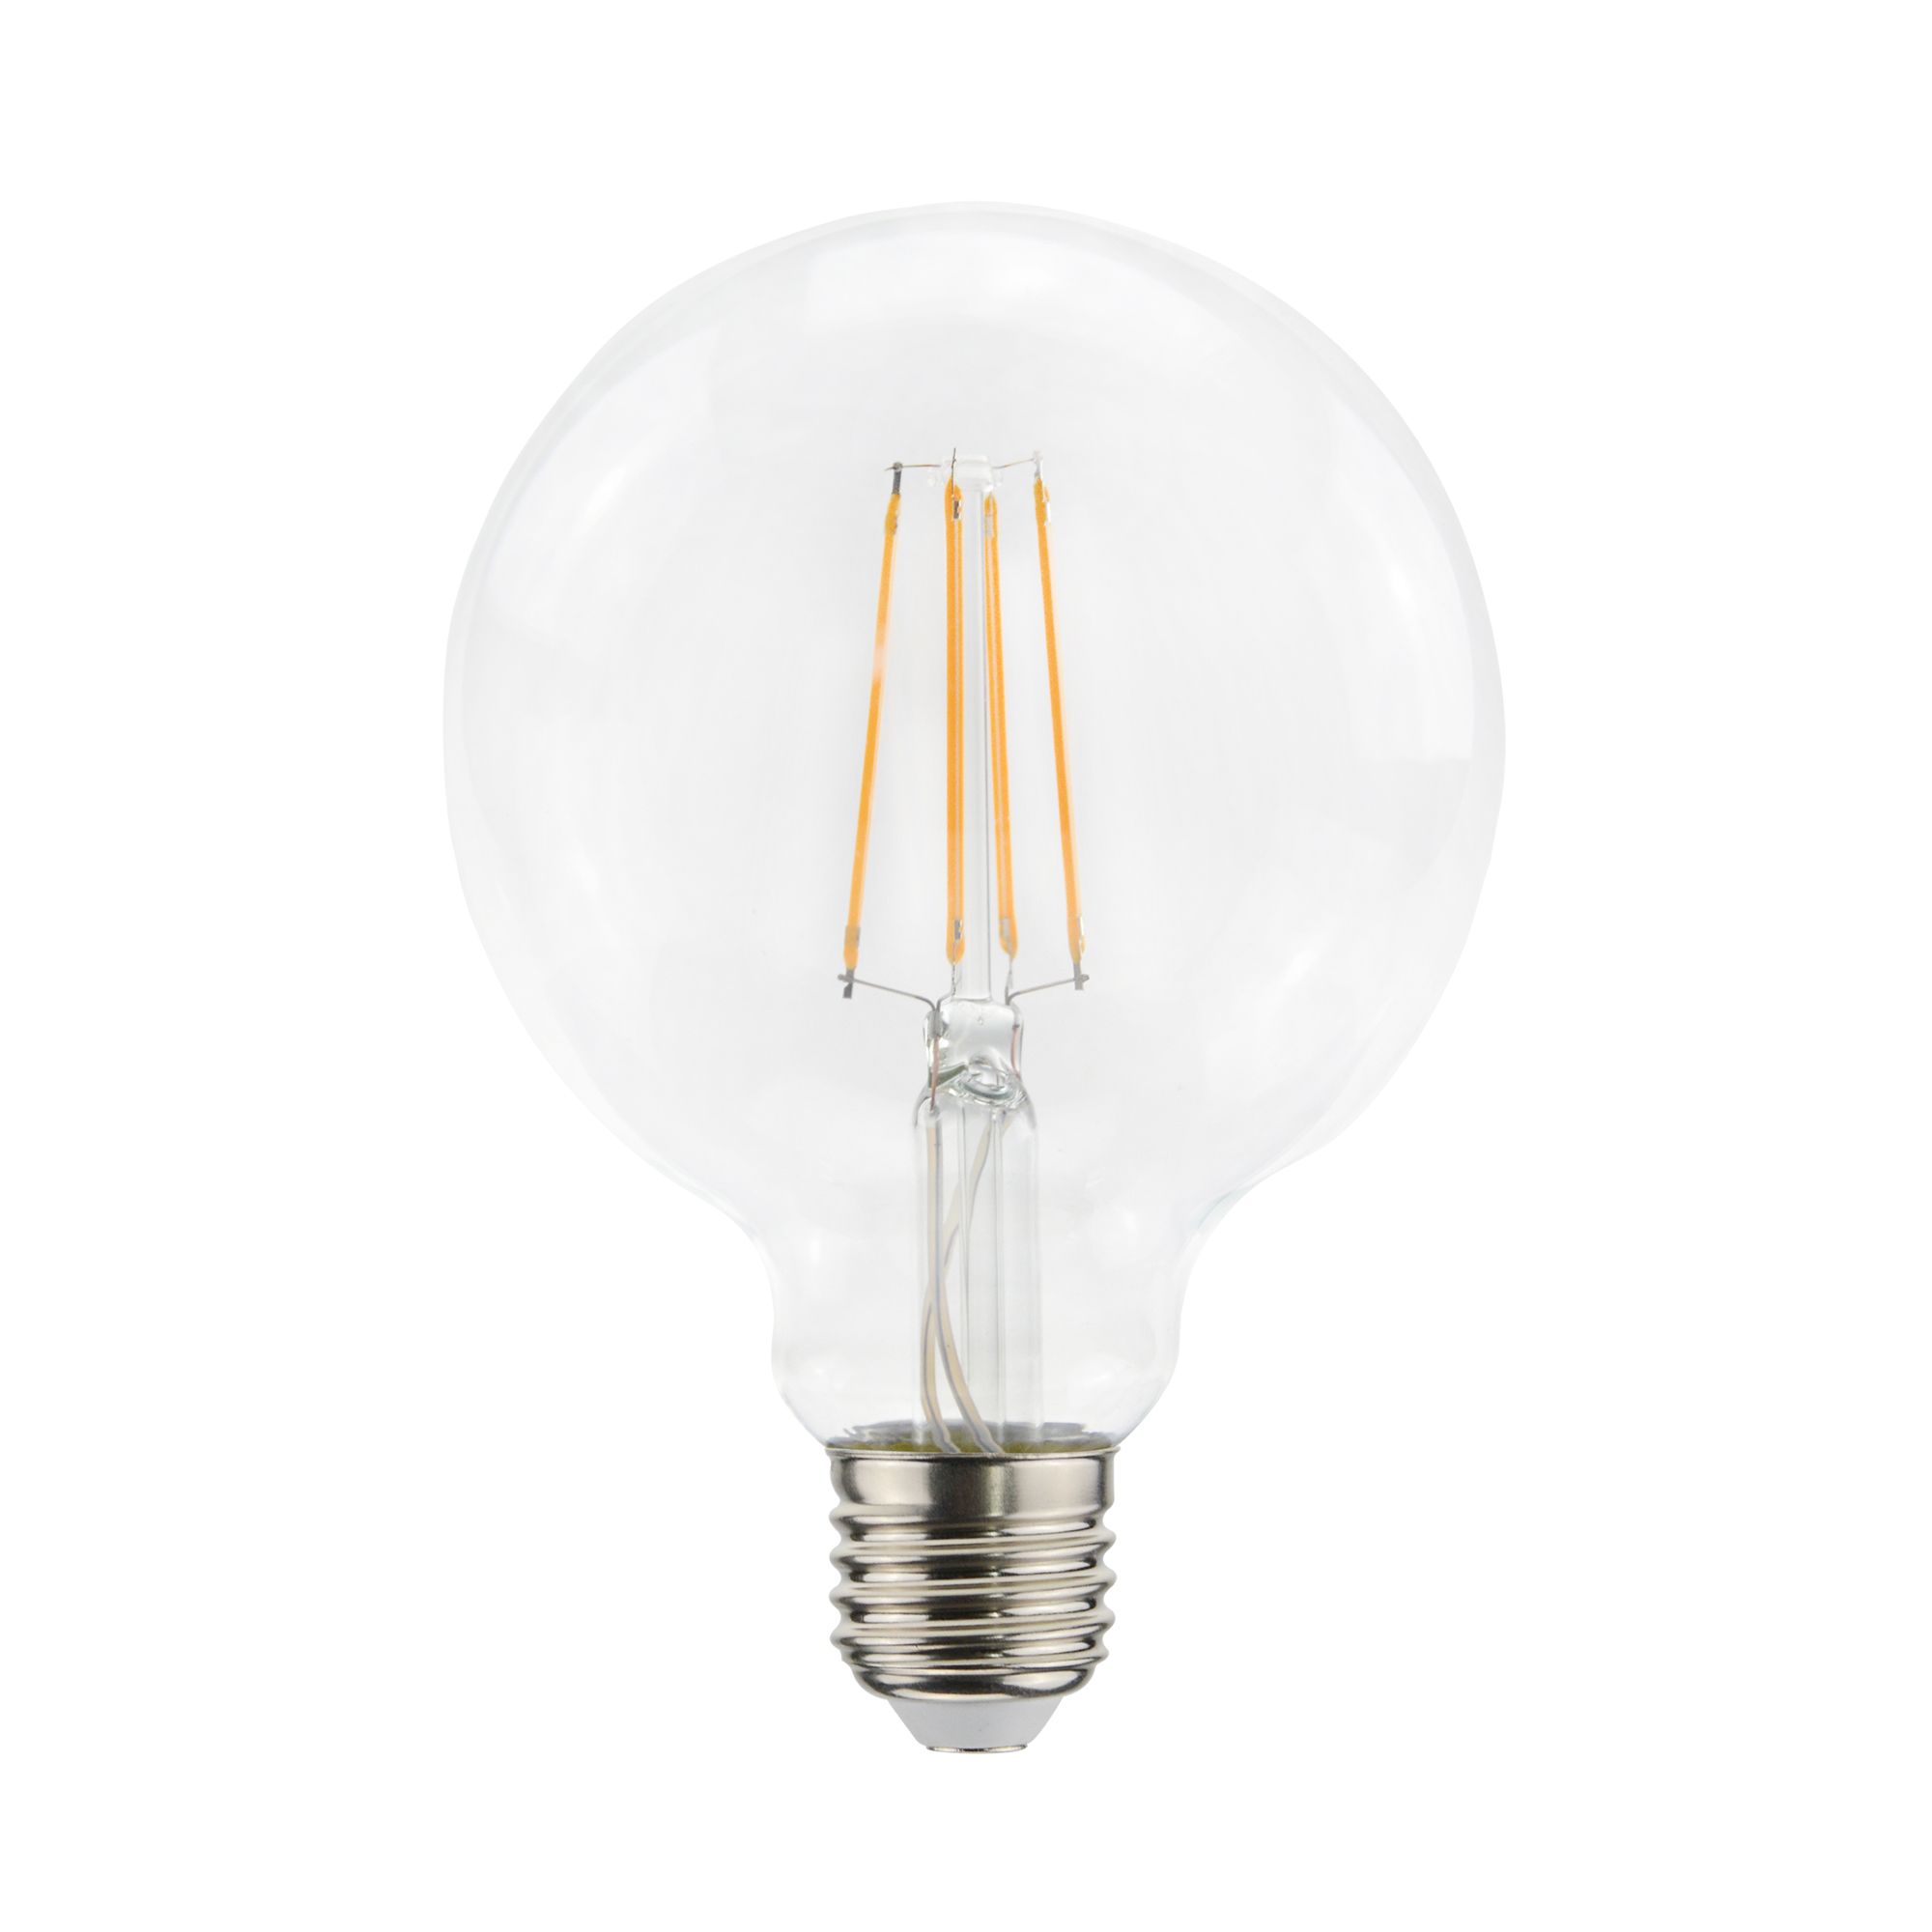 Ampoule LED GP 087885 E27 A45 Mini Globe 5,6W 3 pièces